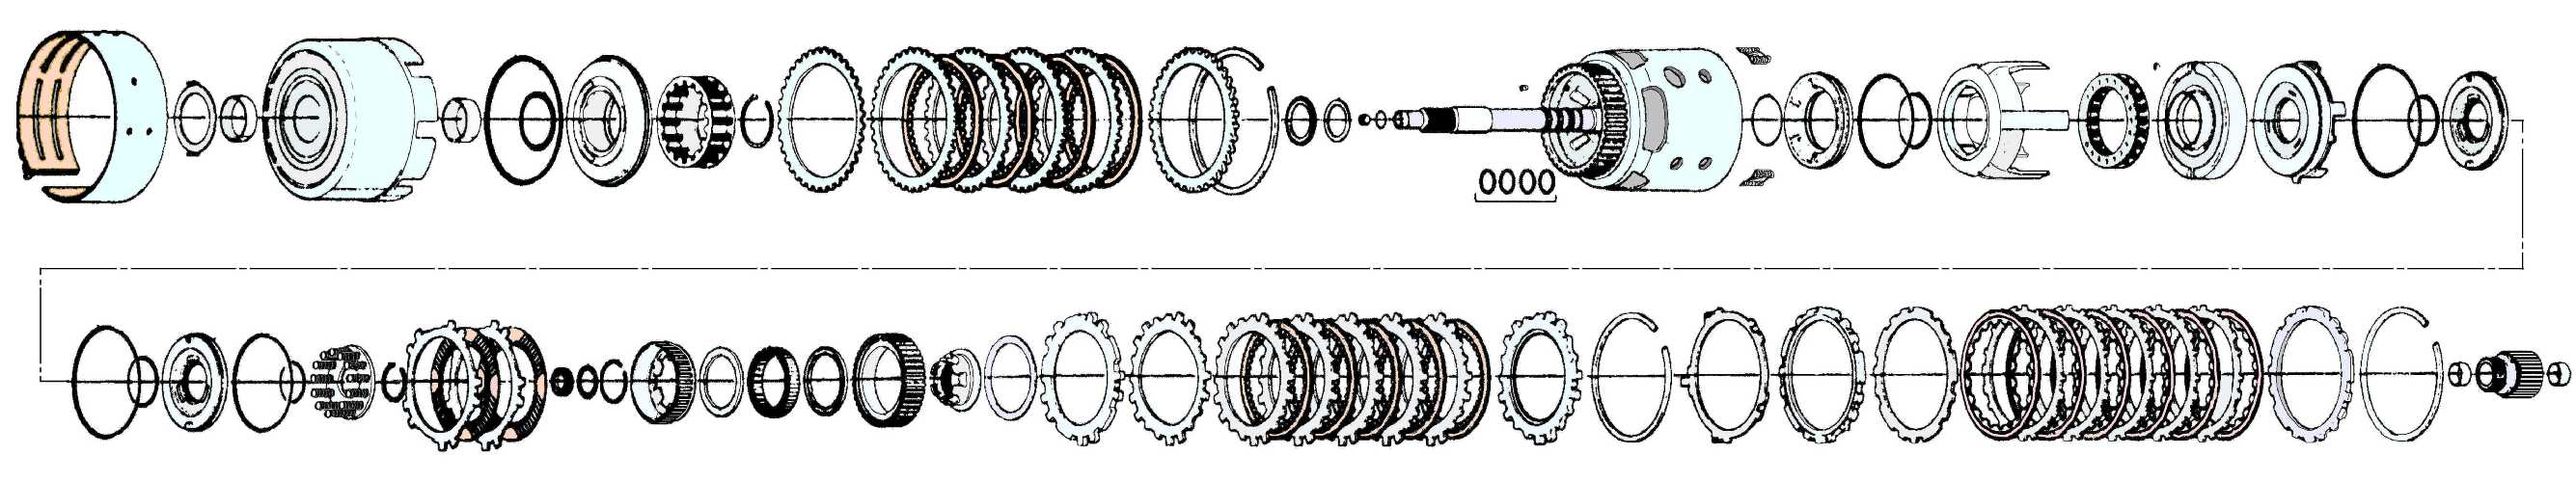 Schematic 4L60E Transmission Wiring Diagram from www.wwdsltd.com